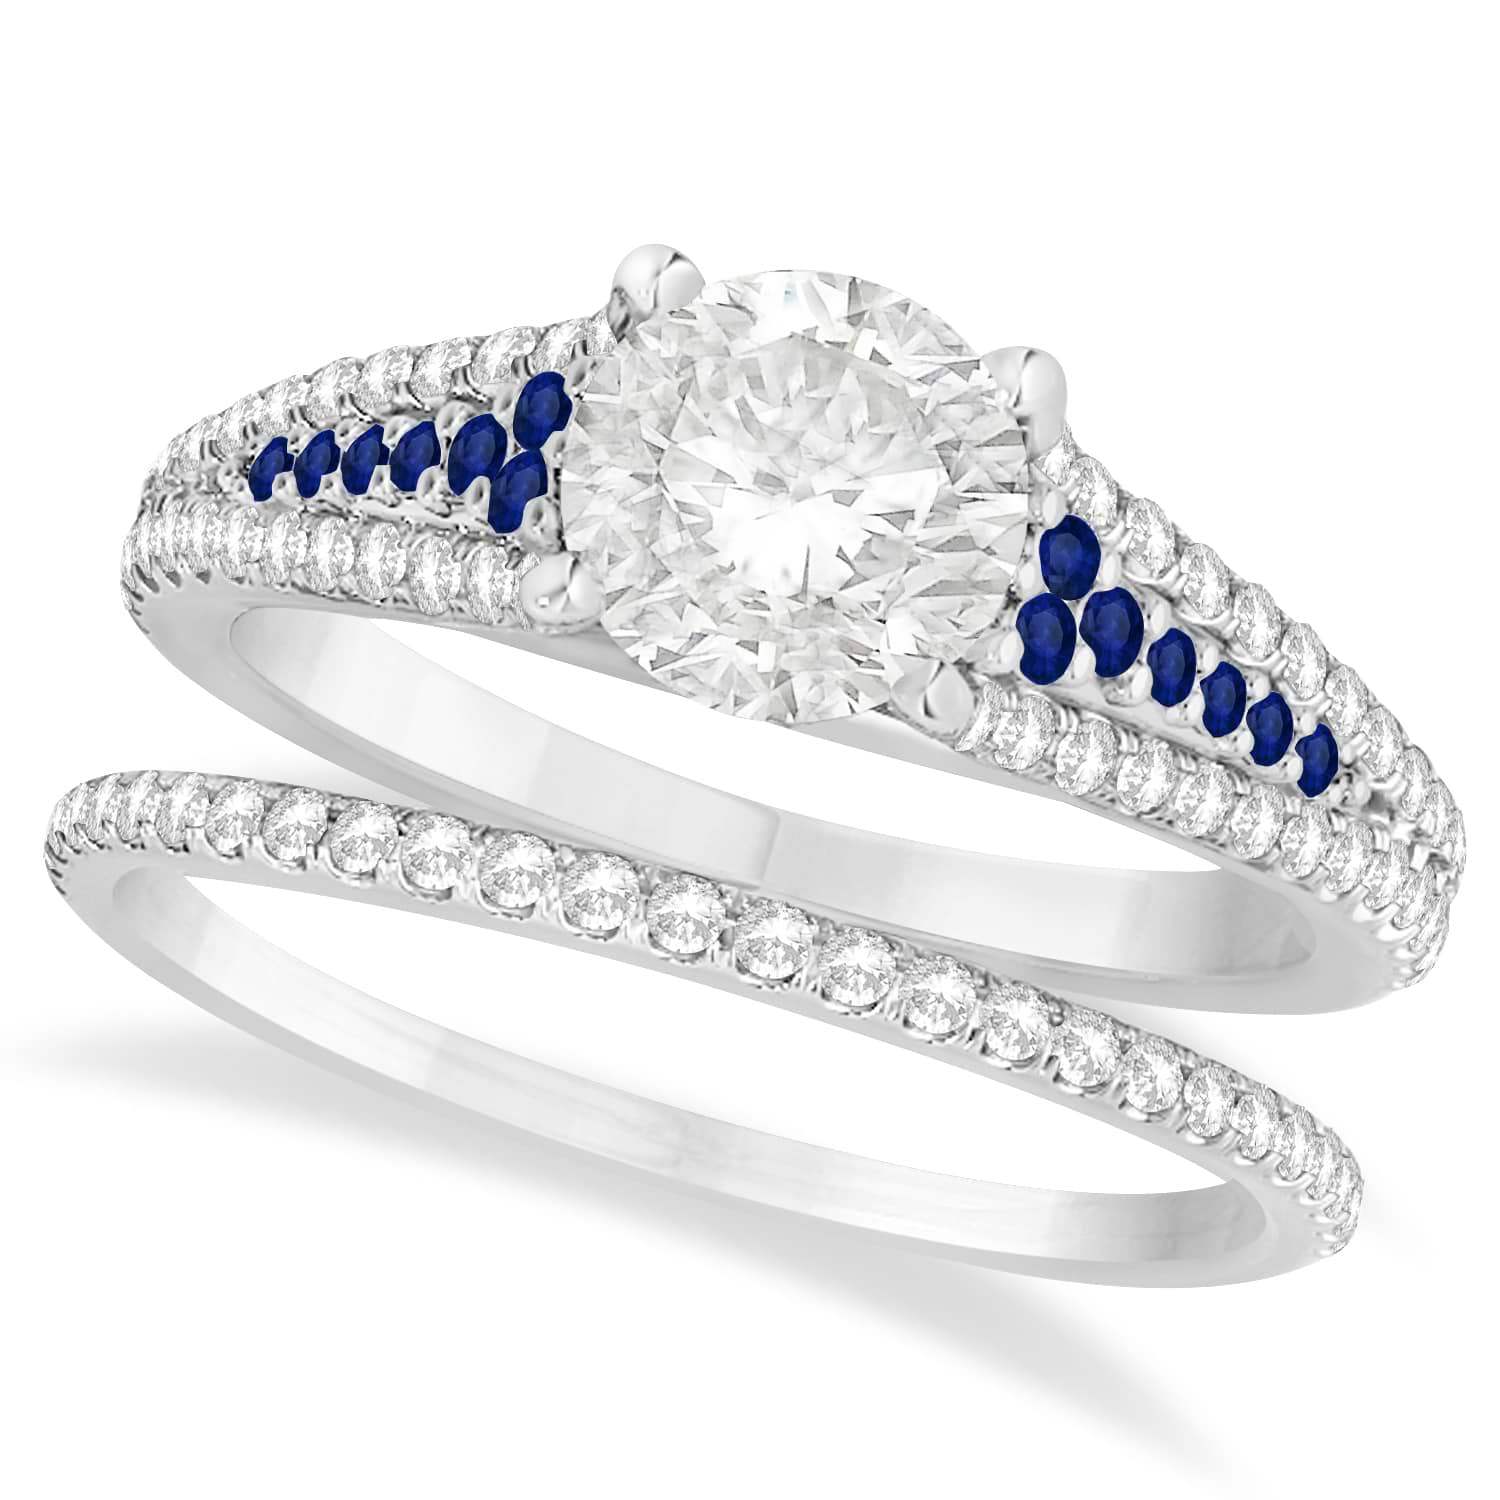 Blue Sapphire and Diamond Bridal Set 14k White Gold (1.47ct)